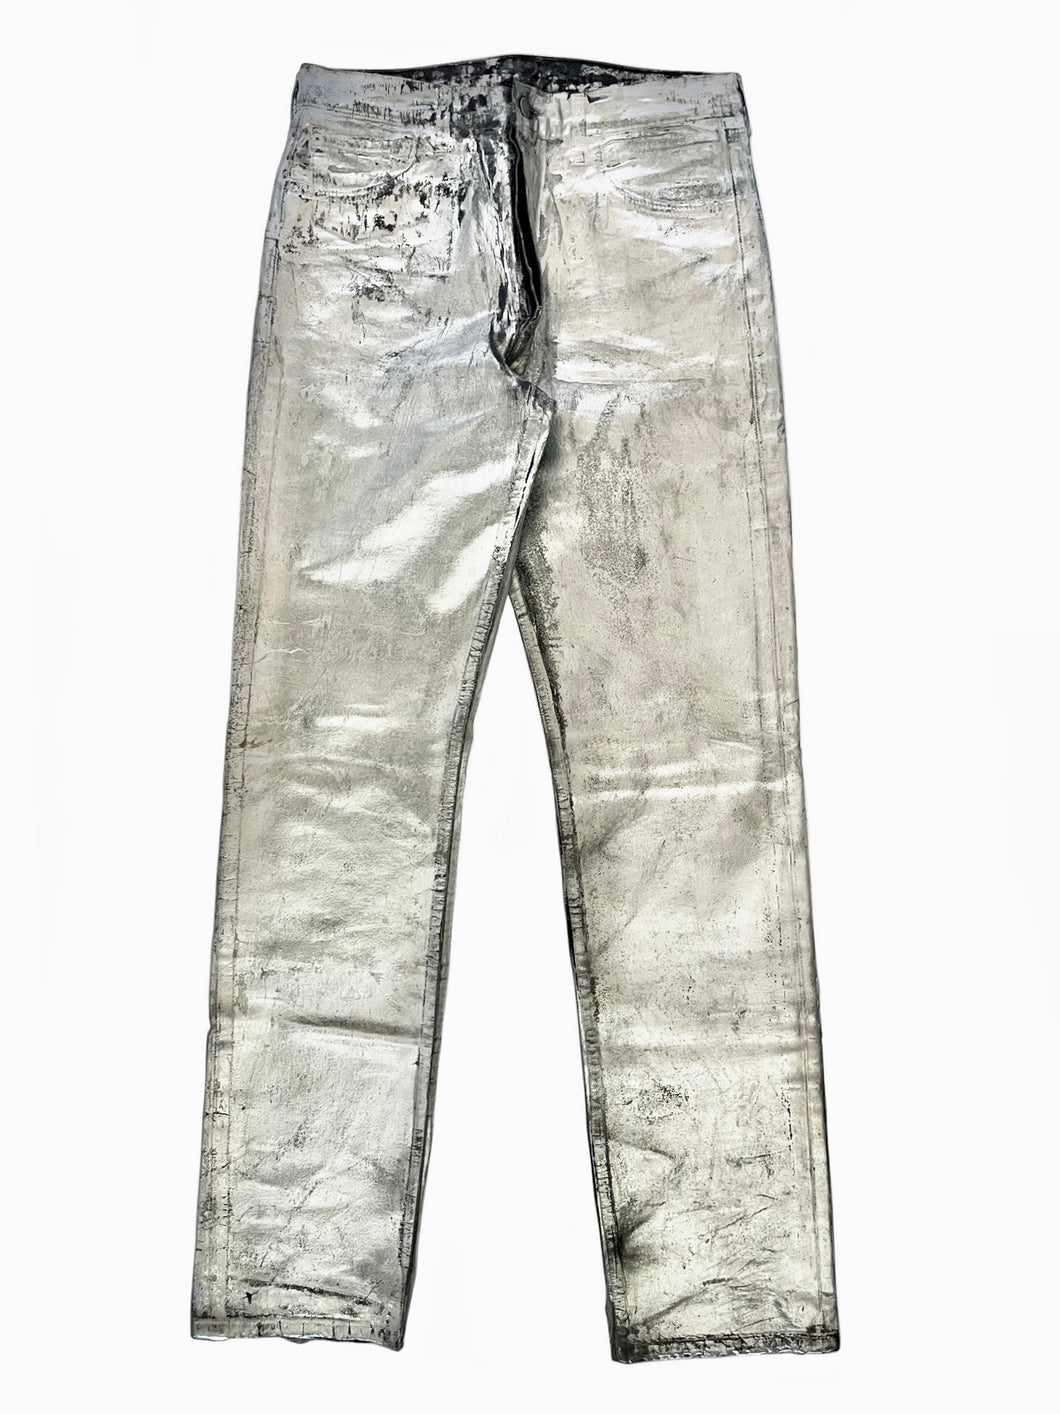 AW1999 Maison Margiela artisanal silver painted jeans